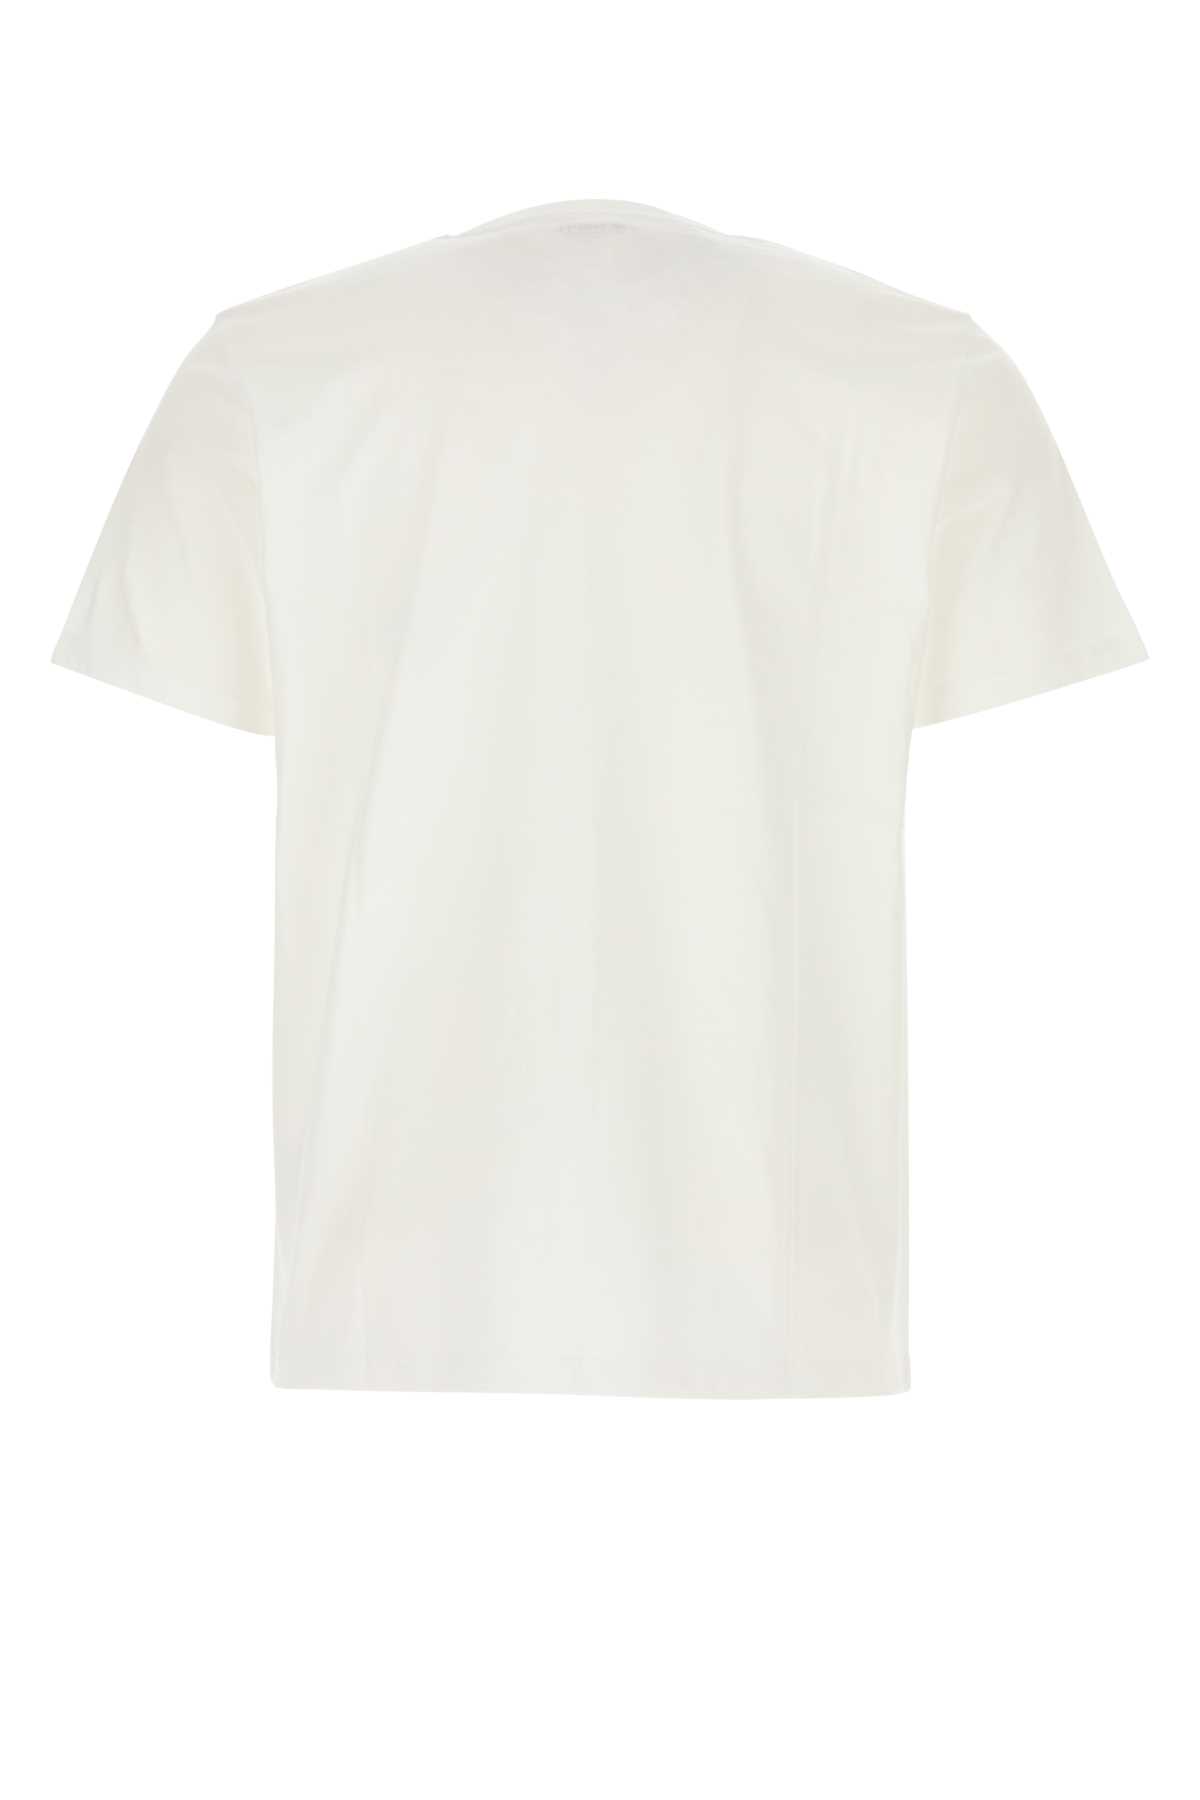 Carhartt White Cotton S/s Pocket T-shirt